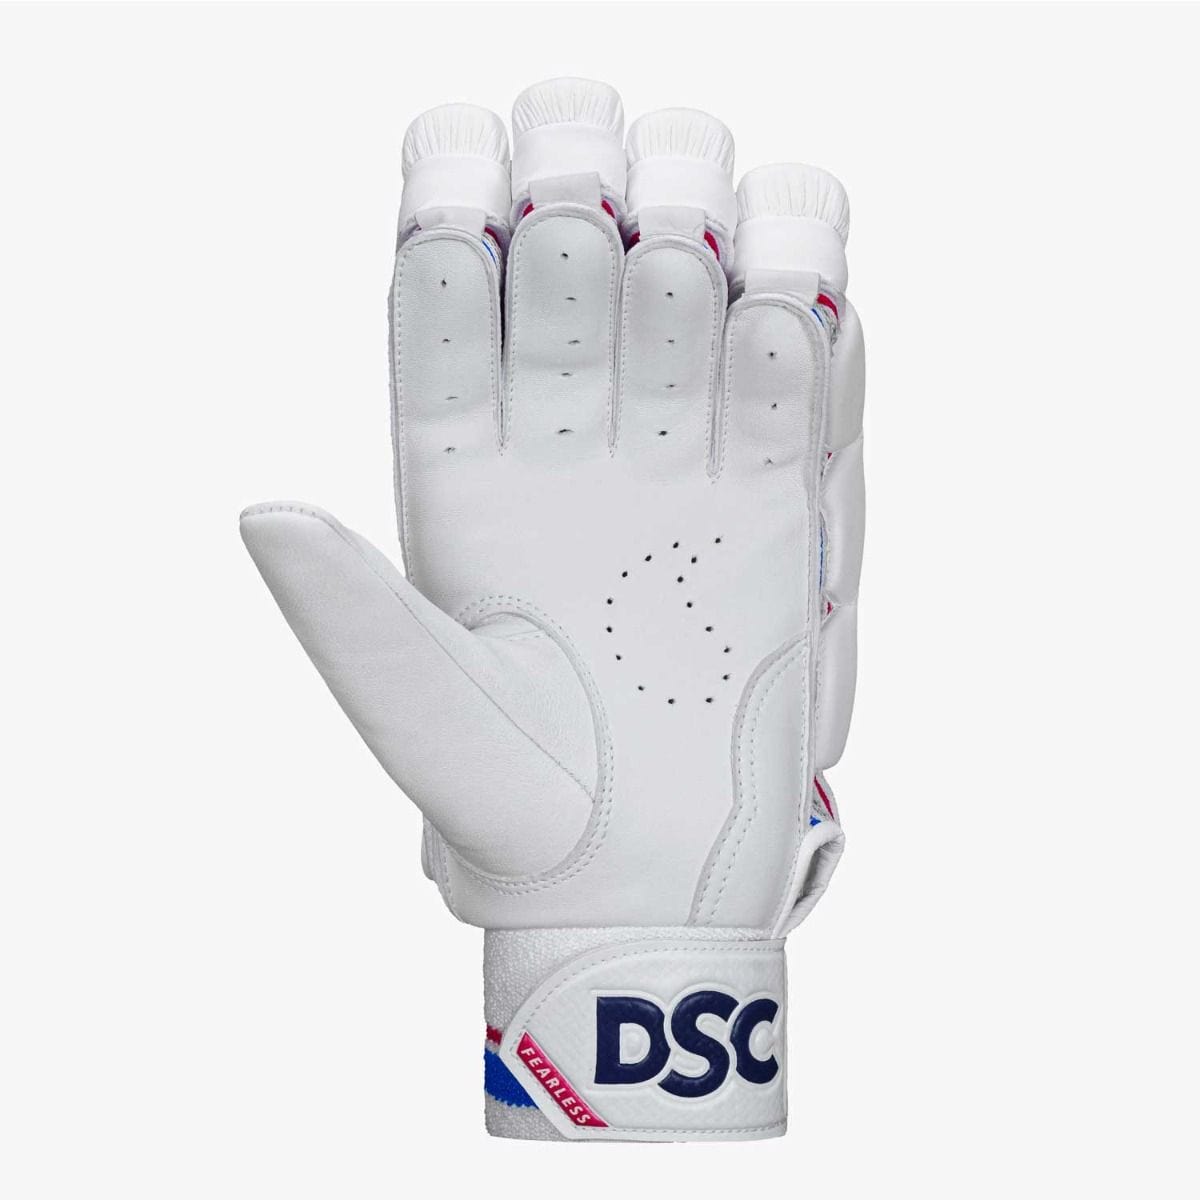 DSC Batting Gloves Adult / RH Intense Pro Batting Gloves